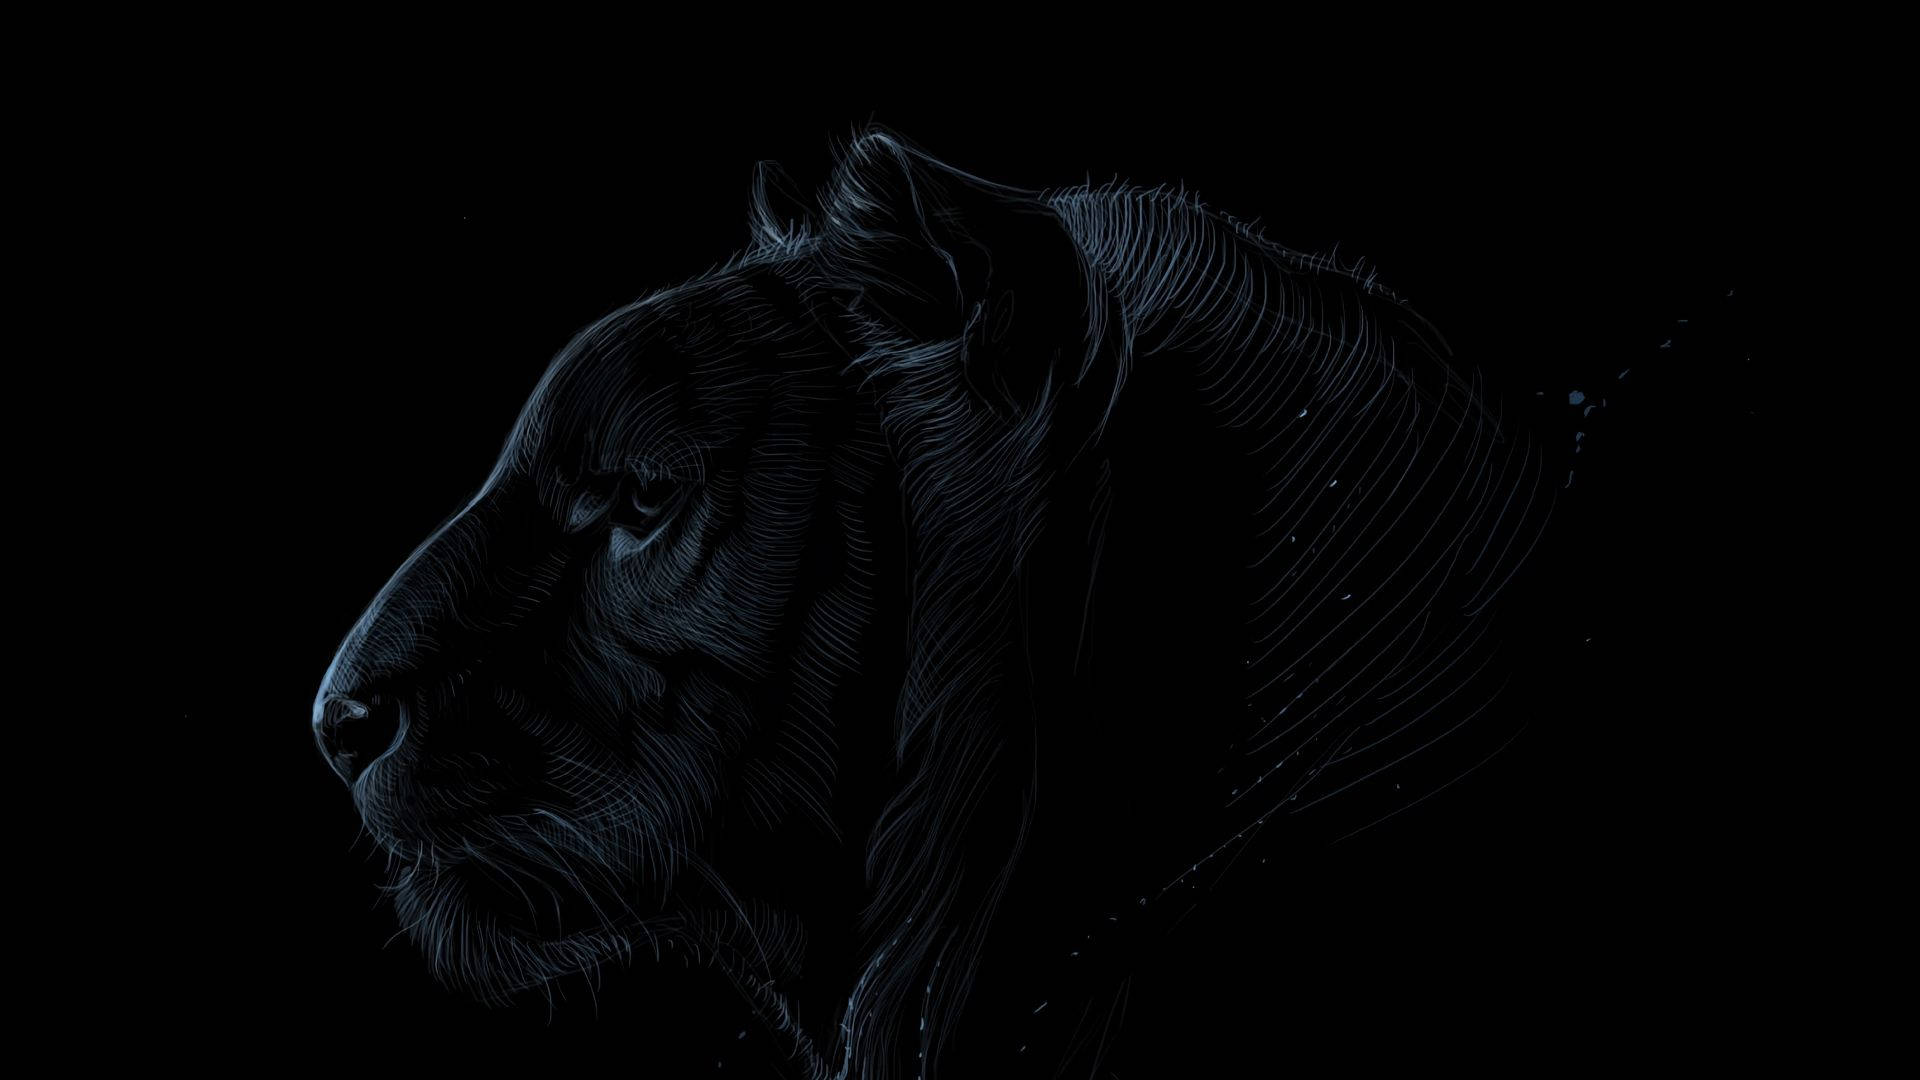 Fierce Black Lion Profile Wallpaper